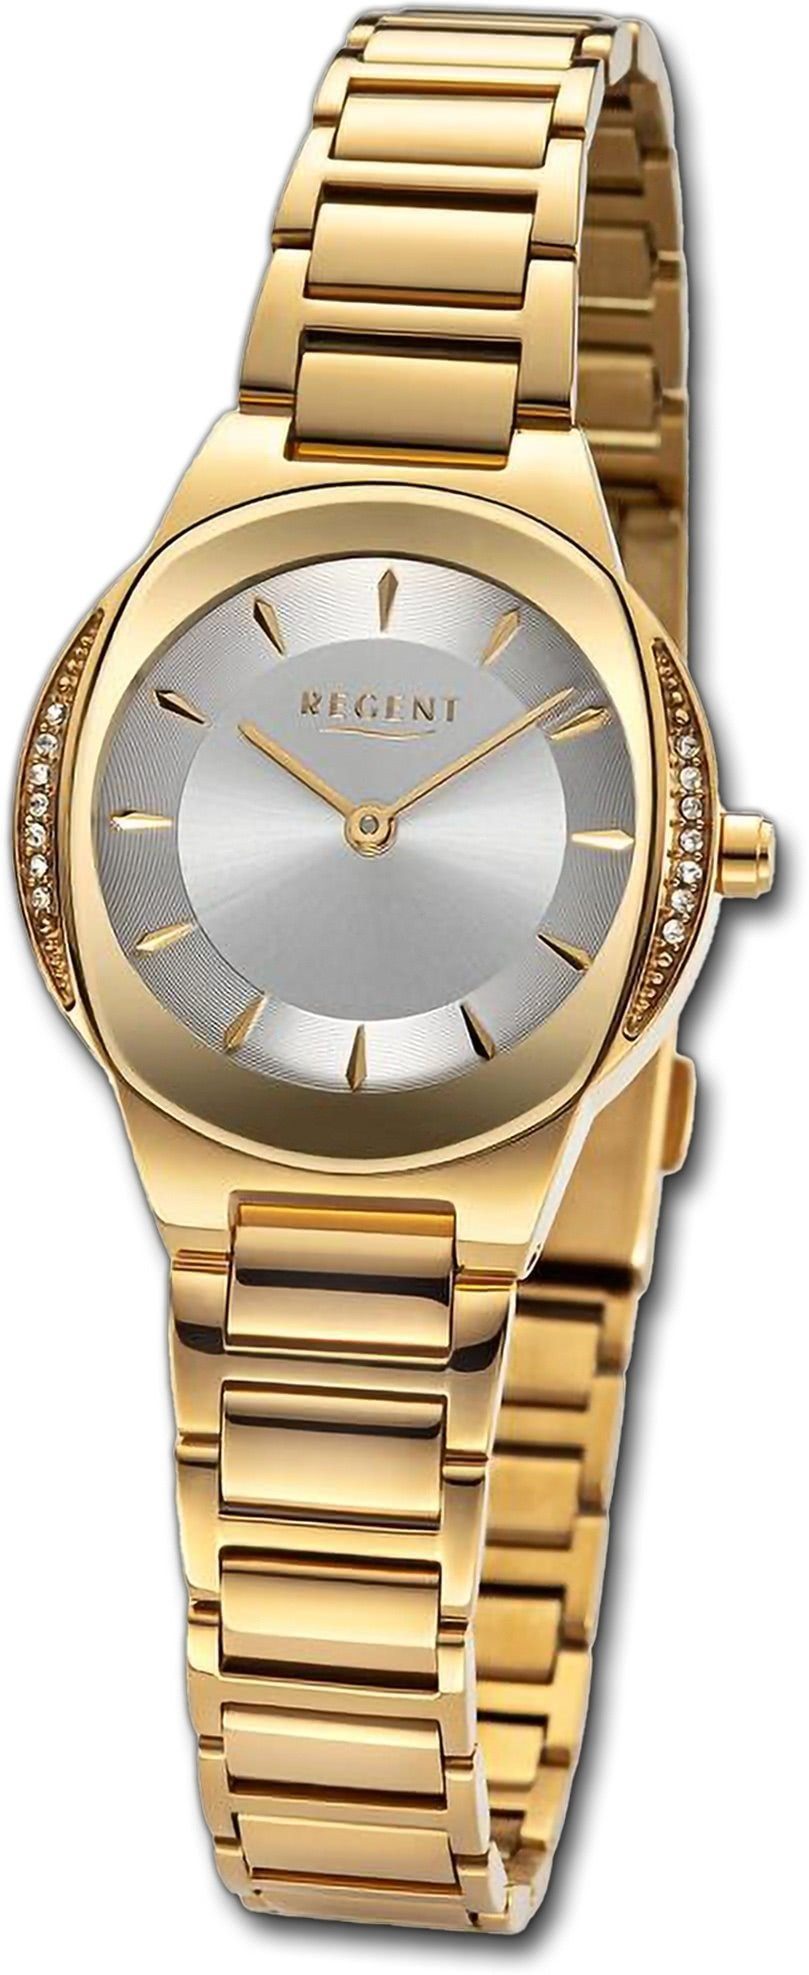 (ca. Regent 28,5mm) extra Armbanduhr Metallarmband Quarzuhr Damen Damenuhr rundes groß gold, Gehäuse, Regent Analog,